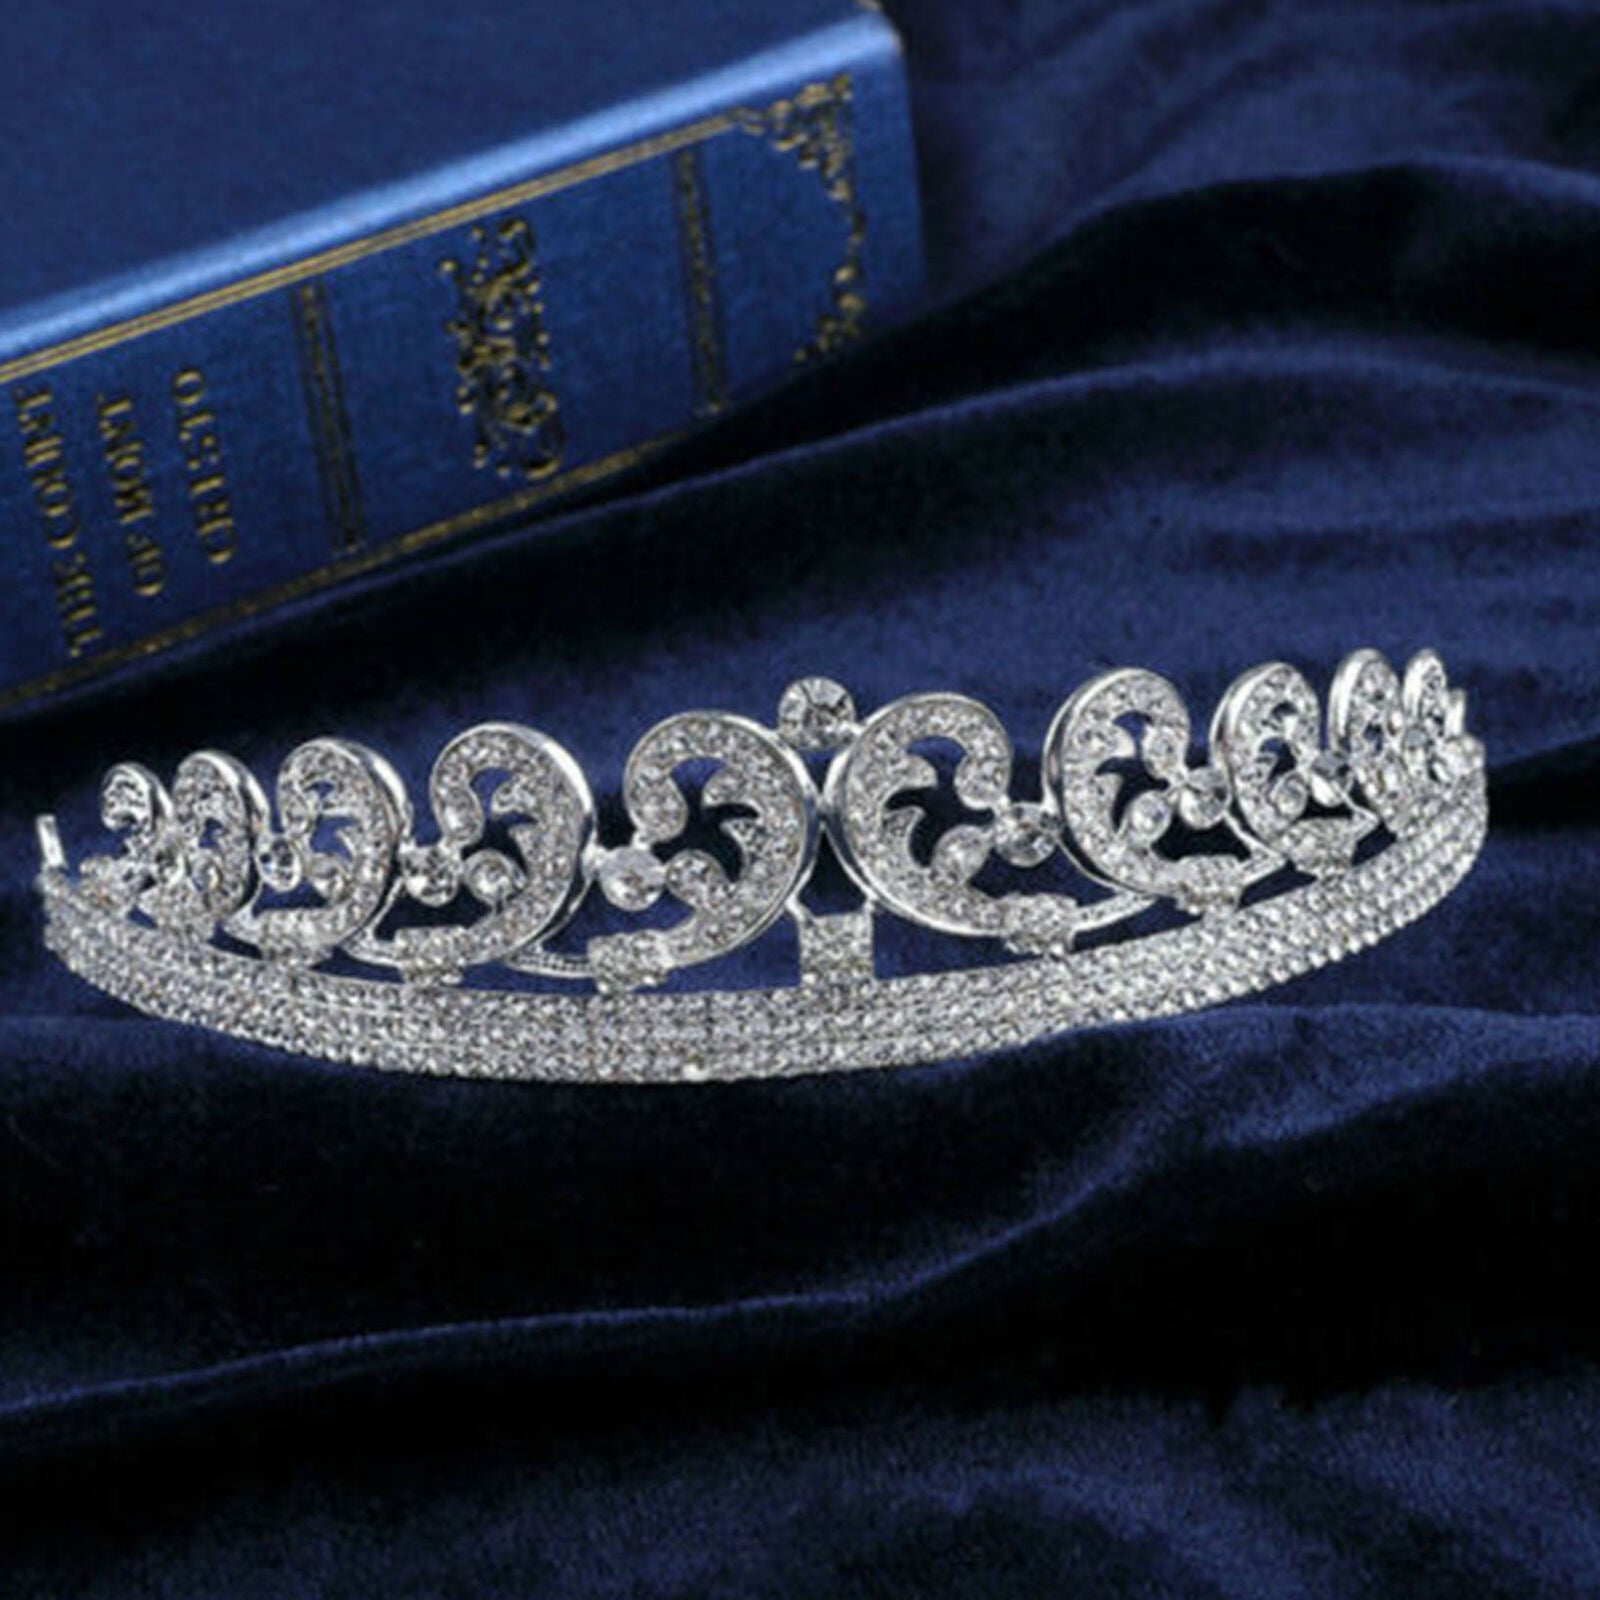 WomenCrystal Princess Wedding Bridal Crown Hair Accessory